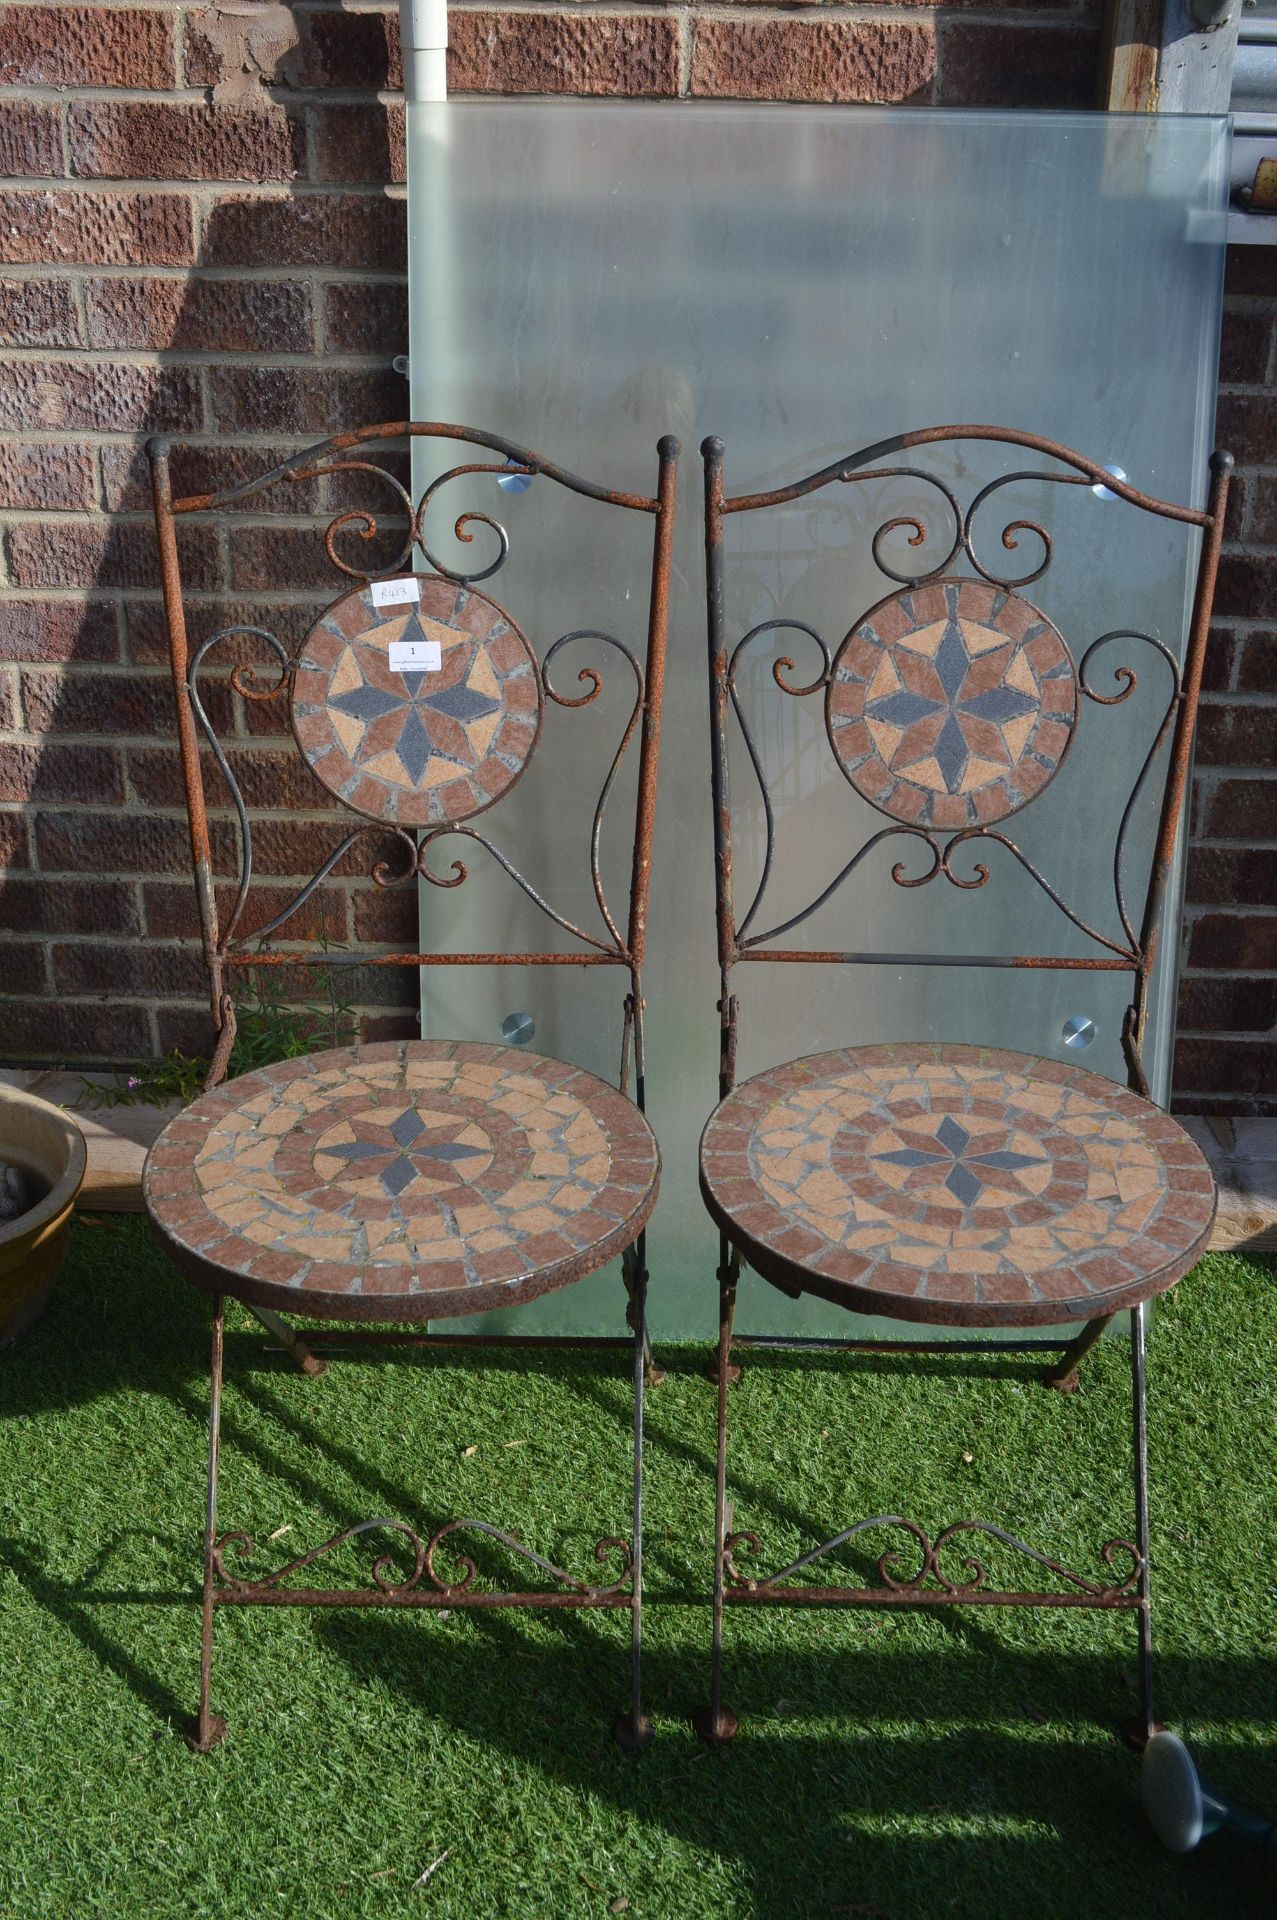 Two Folding Metal Framed Mosaic Tiled Garden Chair